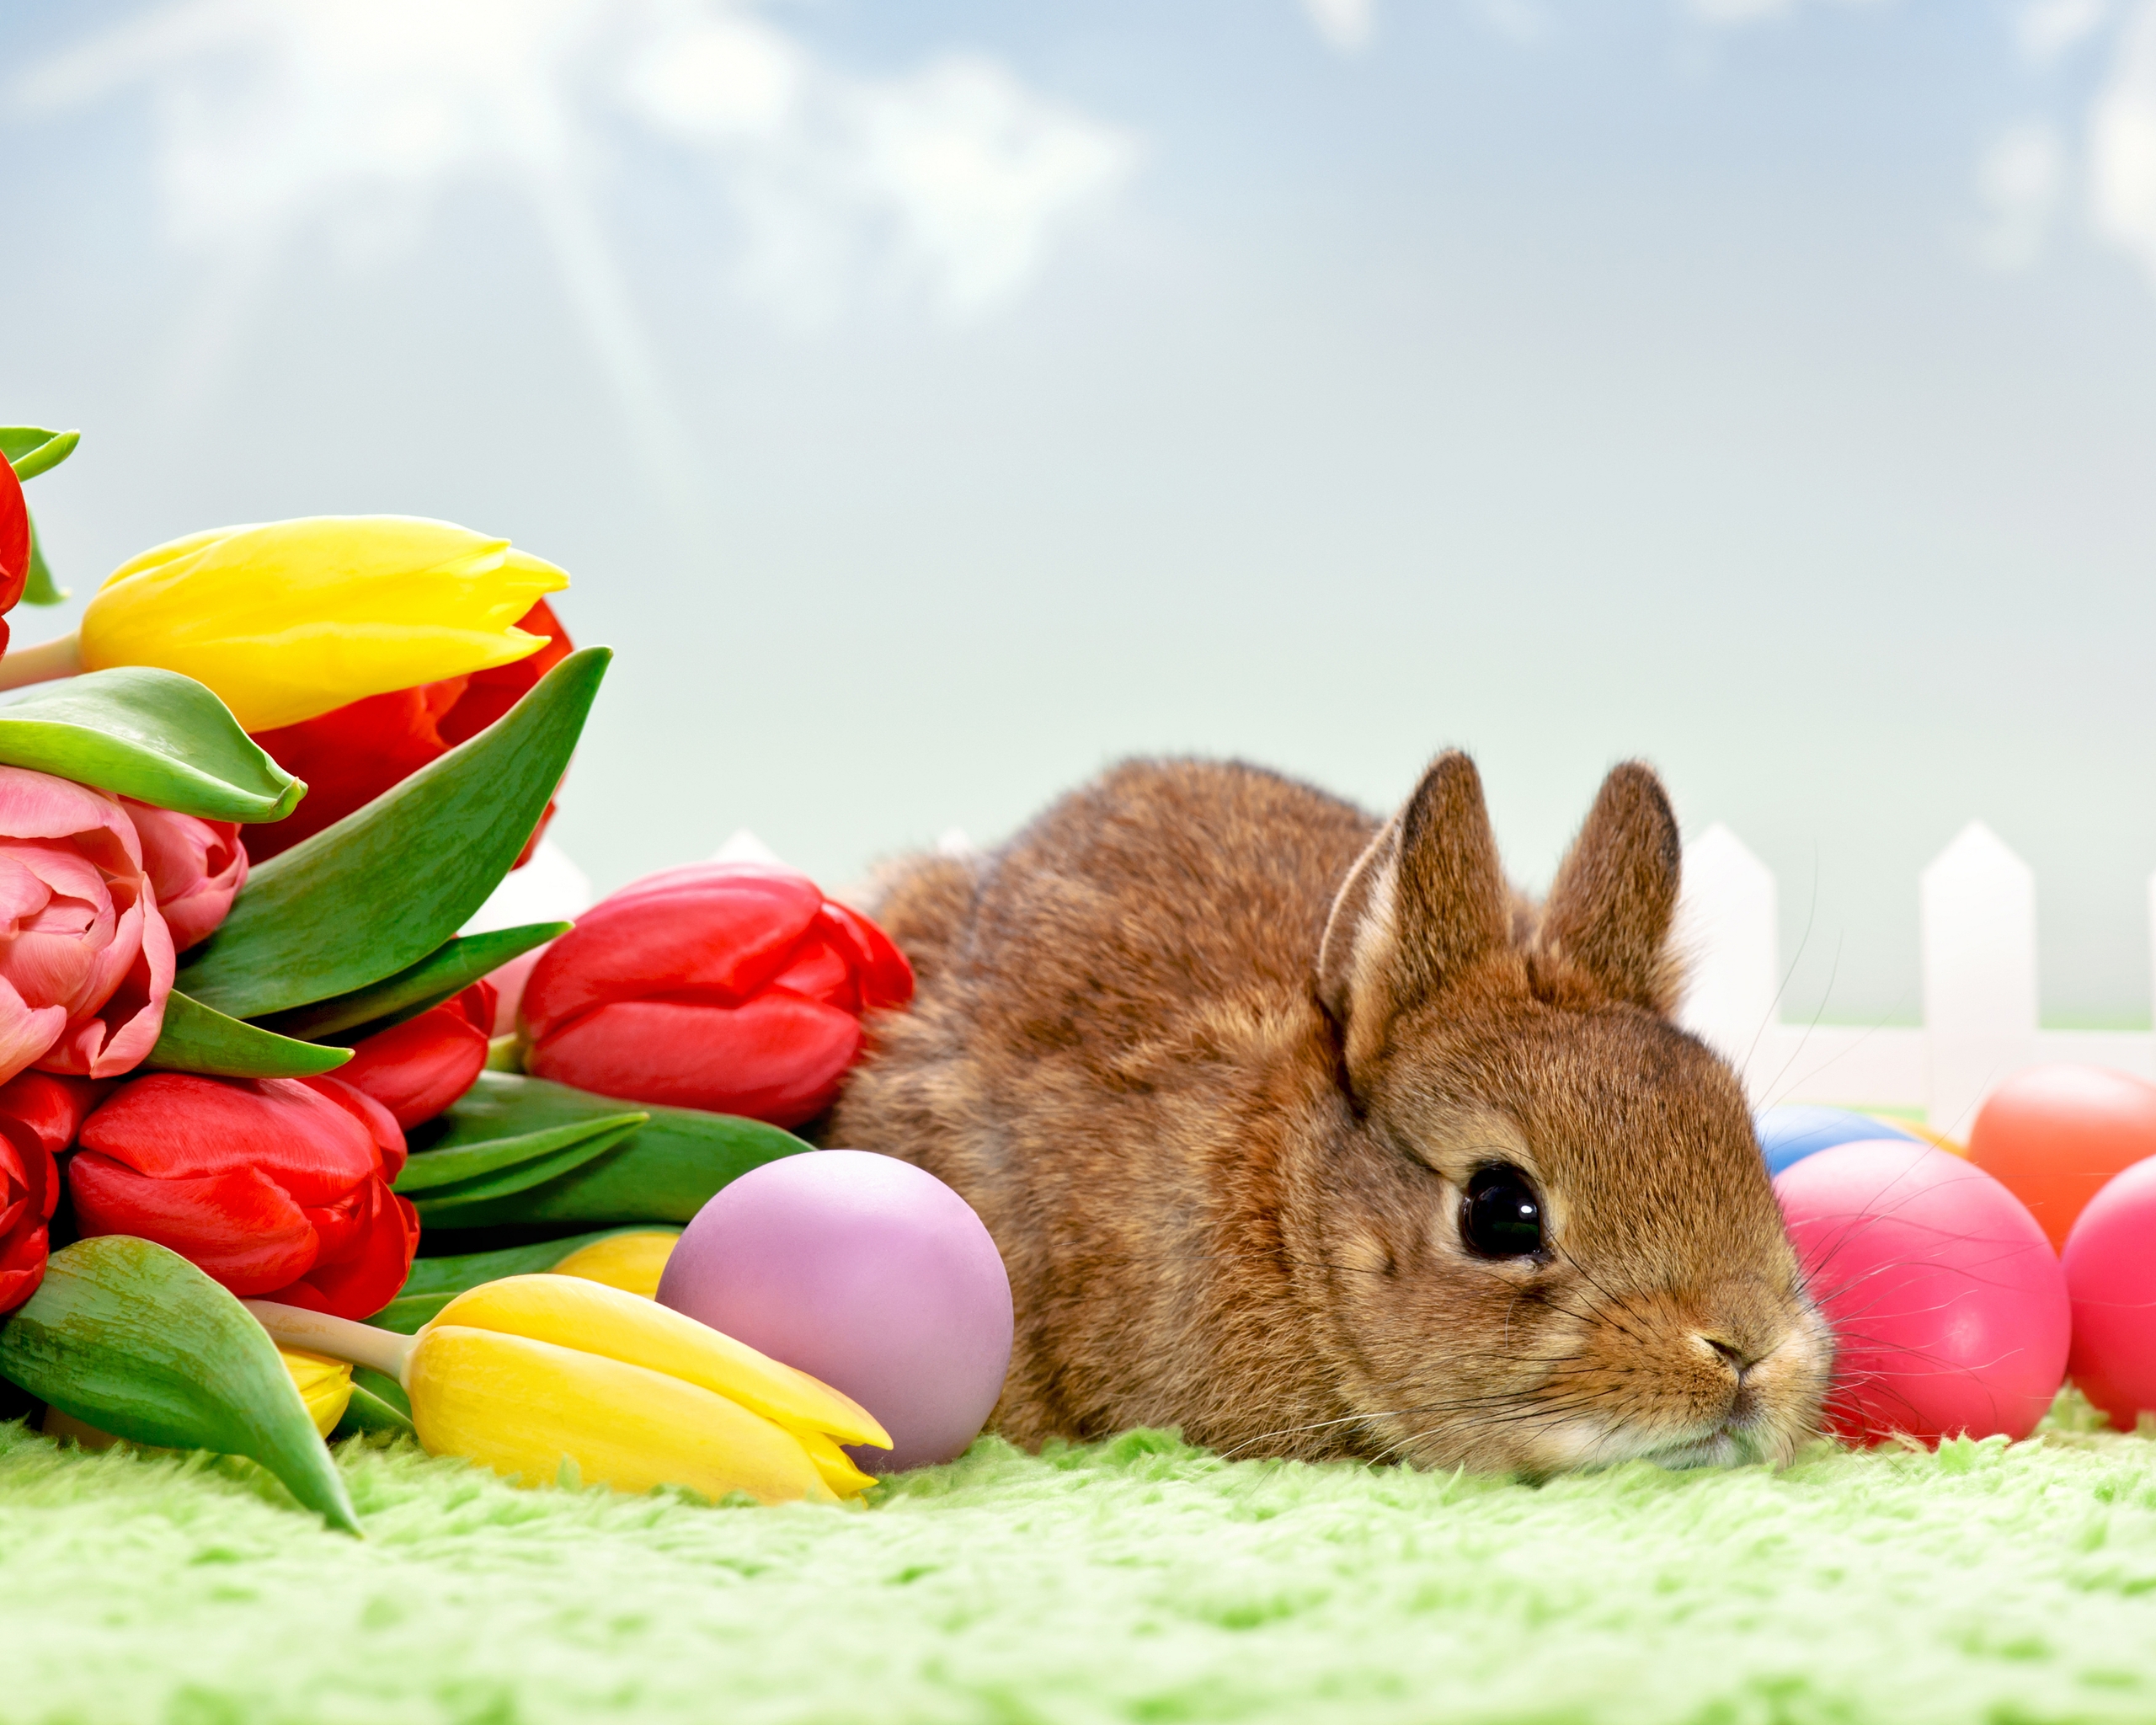 Image: Rabbit, bouquet, tulips, flowers, eggs, Easter